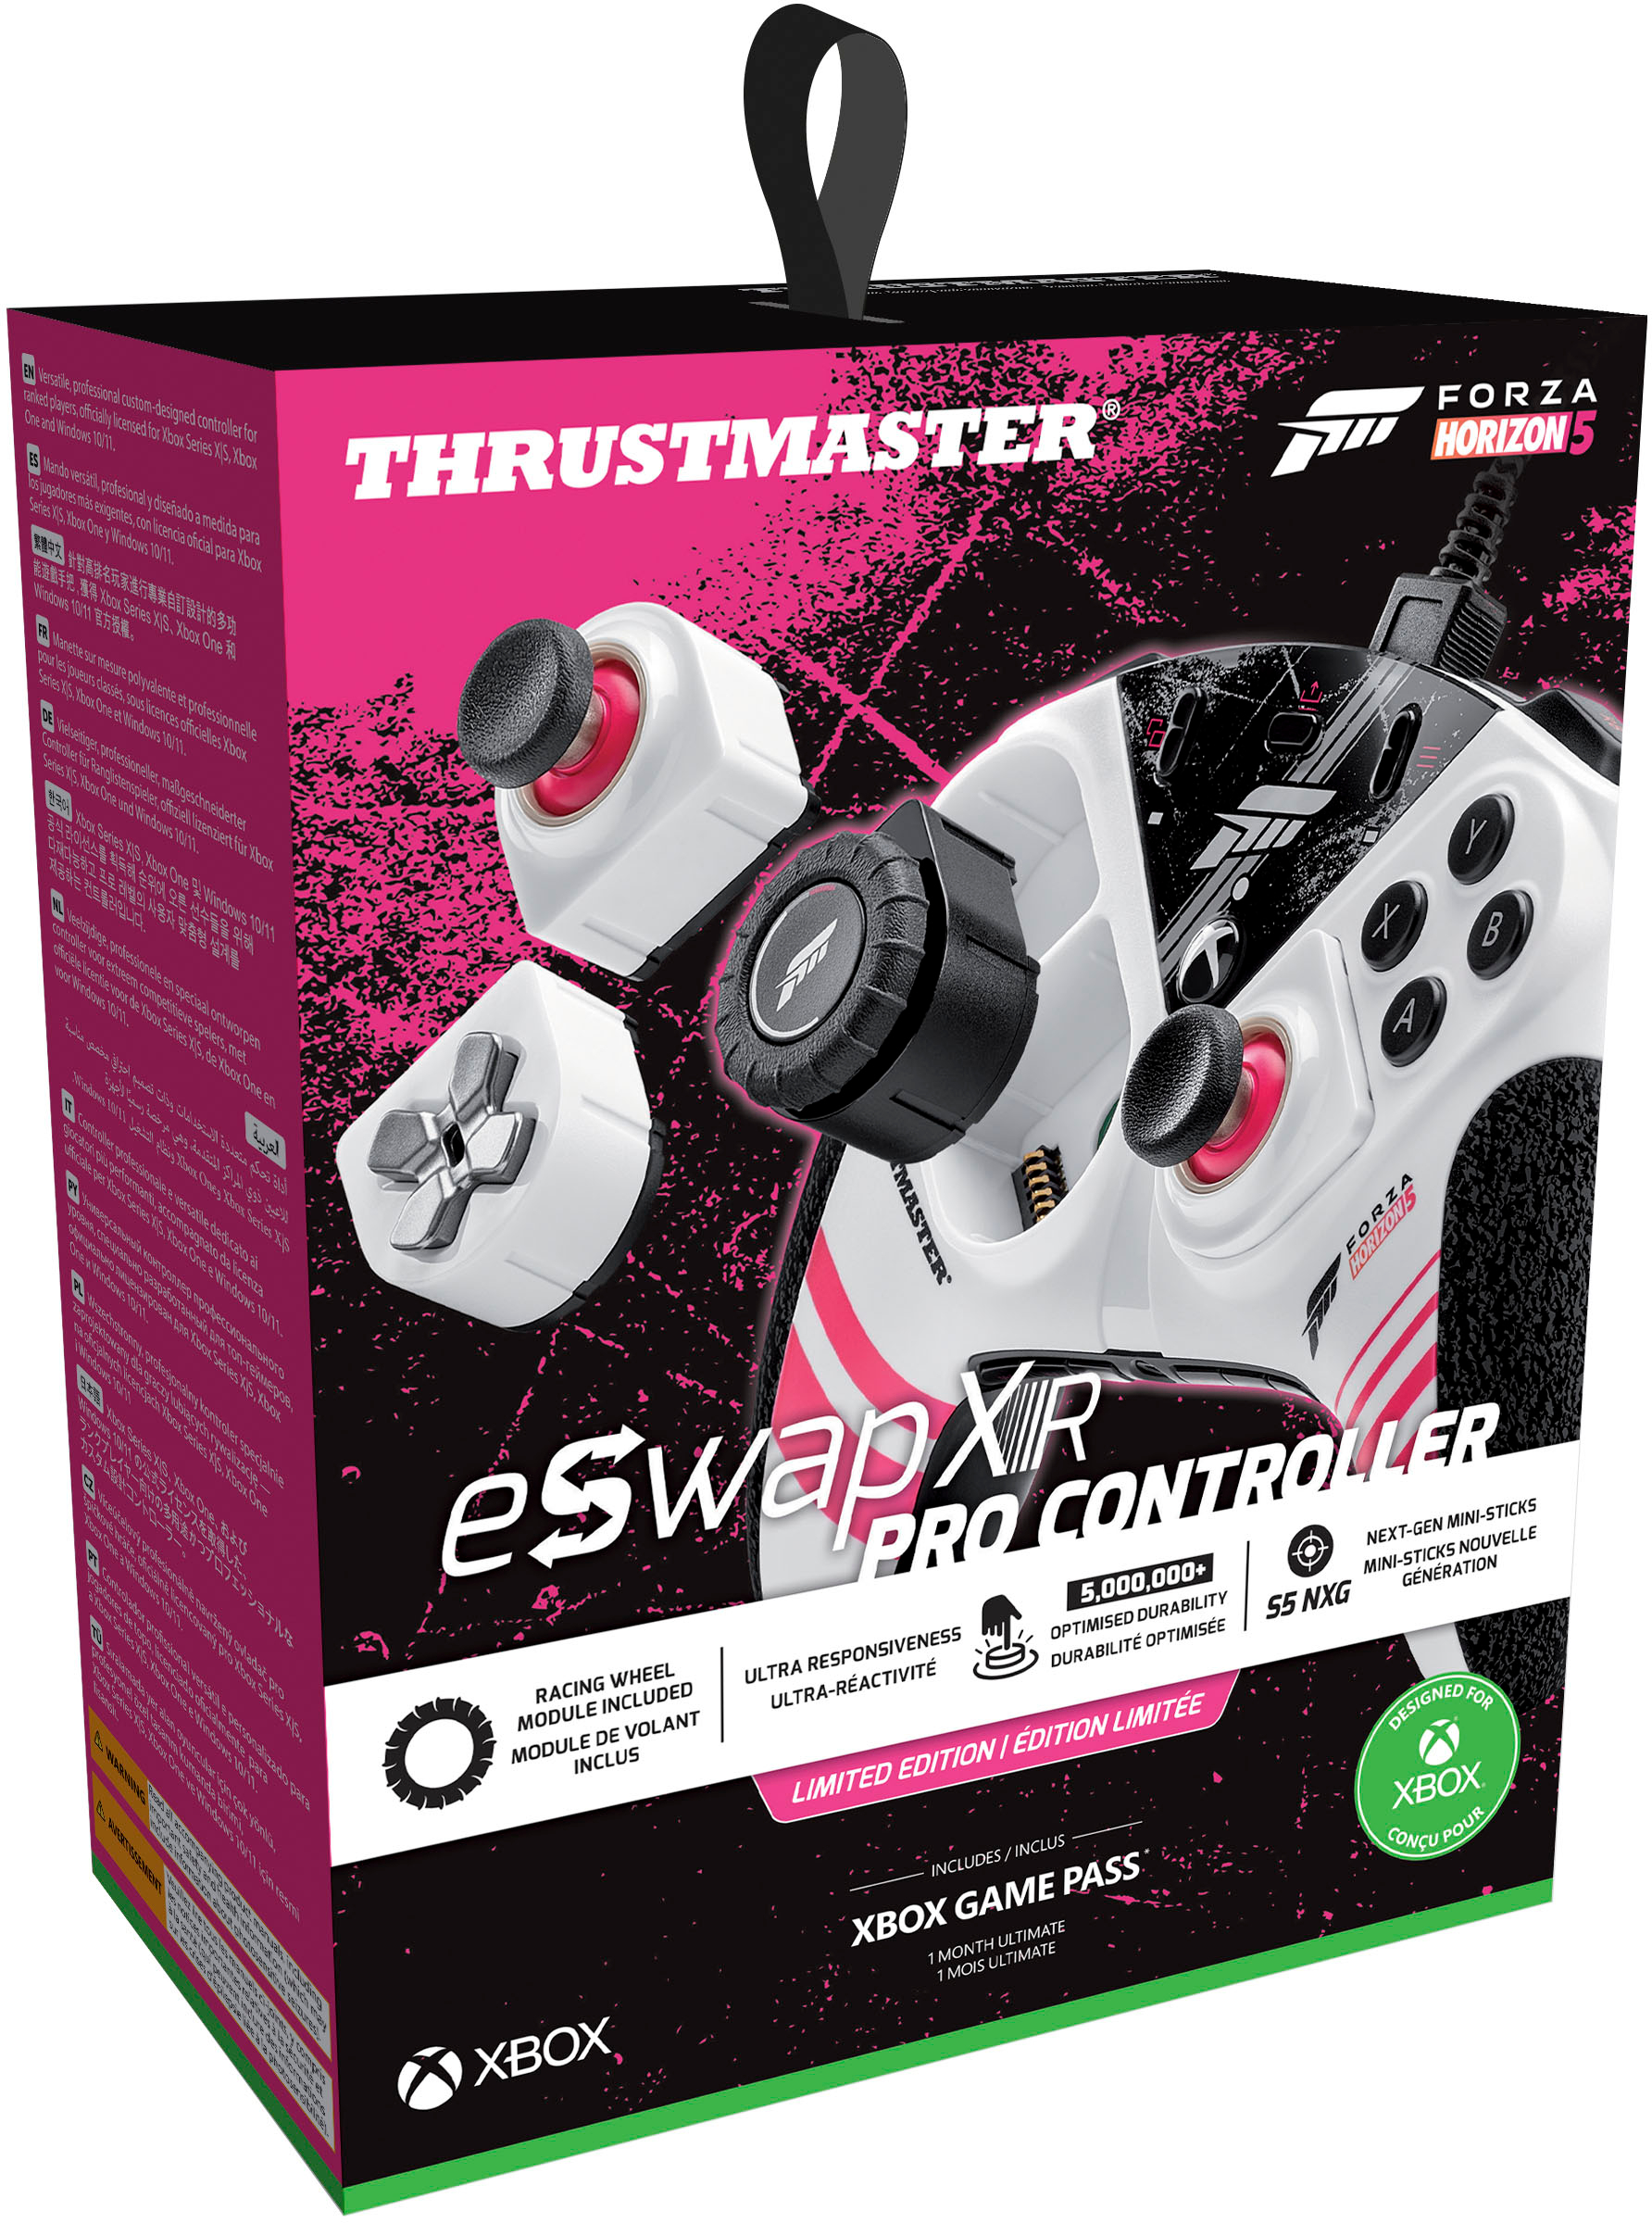 Thrustmaster eSwap X R Pro Controller Forza Horizon 5 Edition for